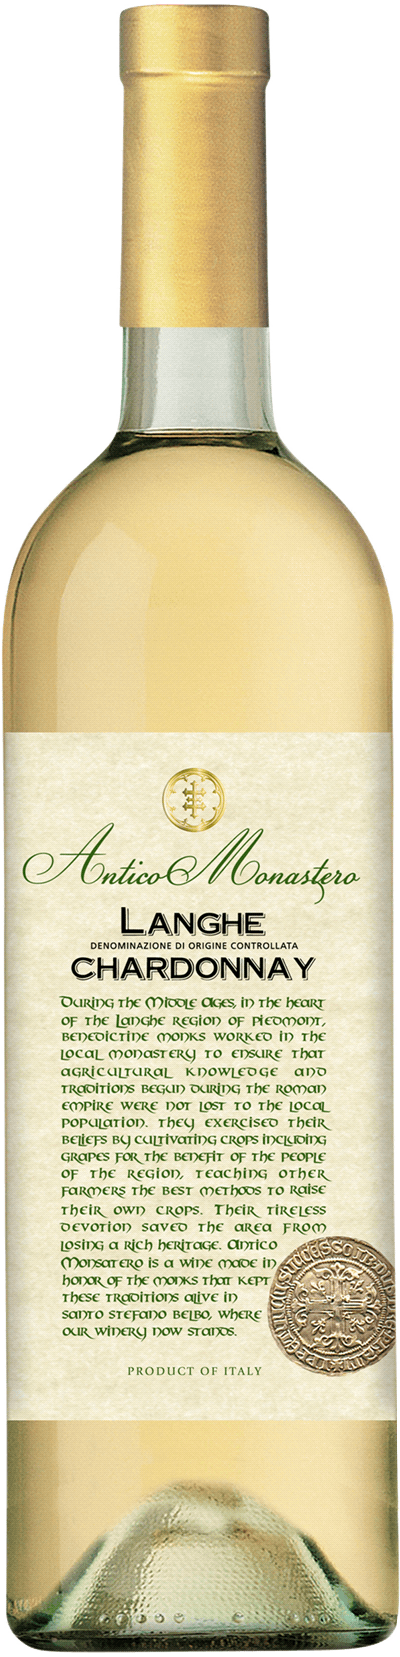 Antico Monastero Langhe Chardonnay